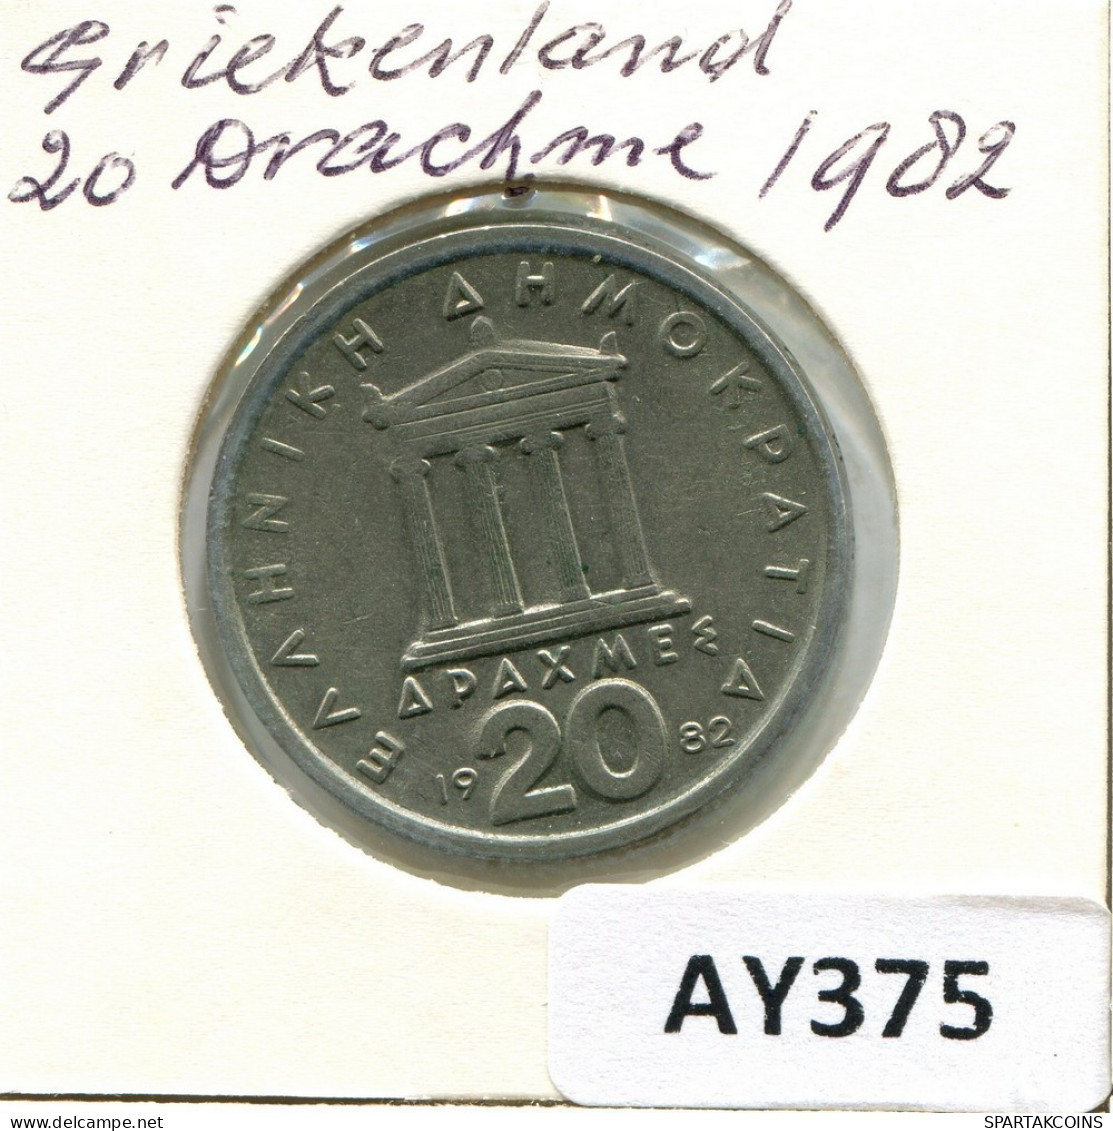 20 DRACHMES 1982 GRIECHENLAND GREECE Münze #AY375.D.A - Grèce